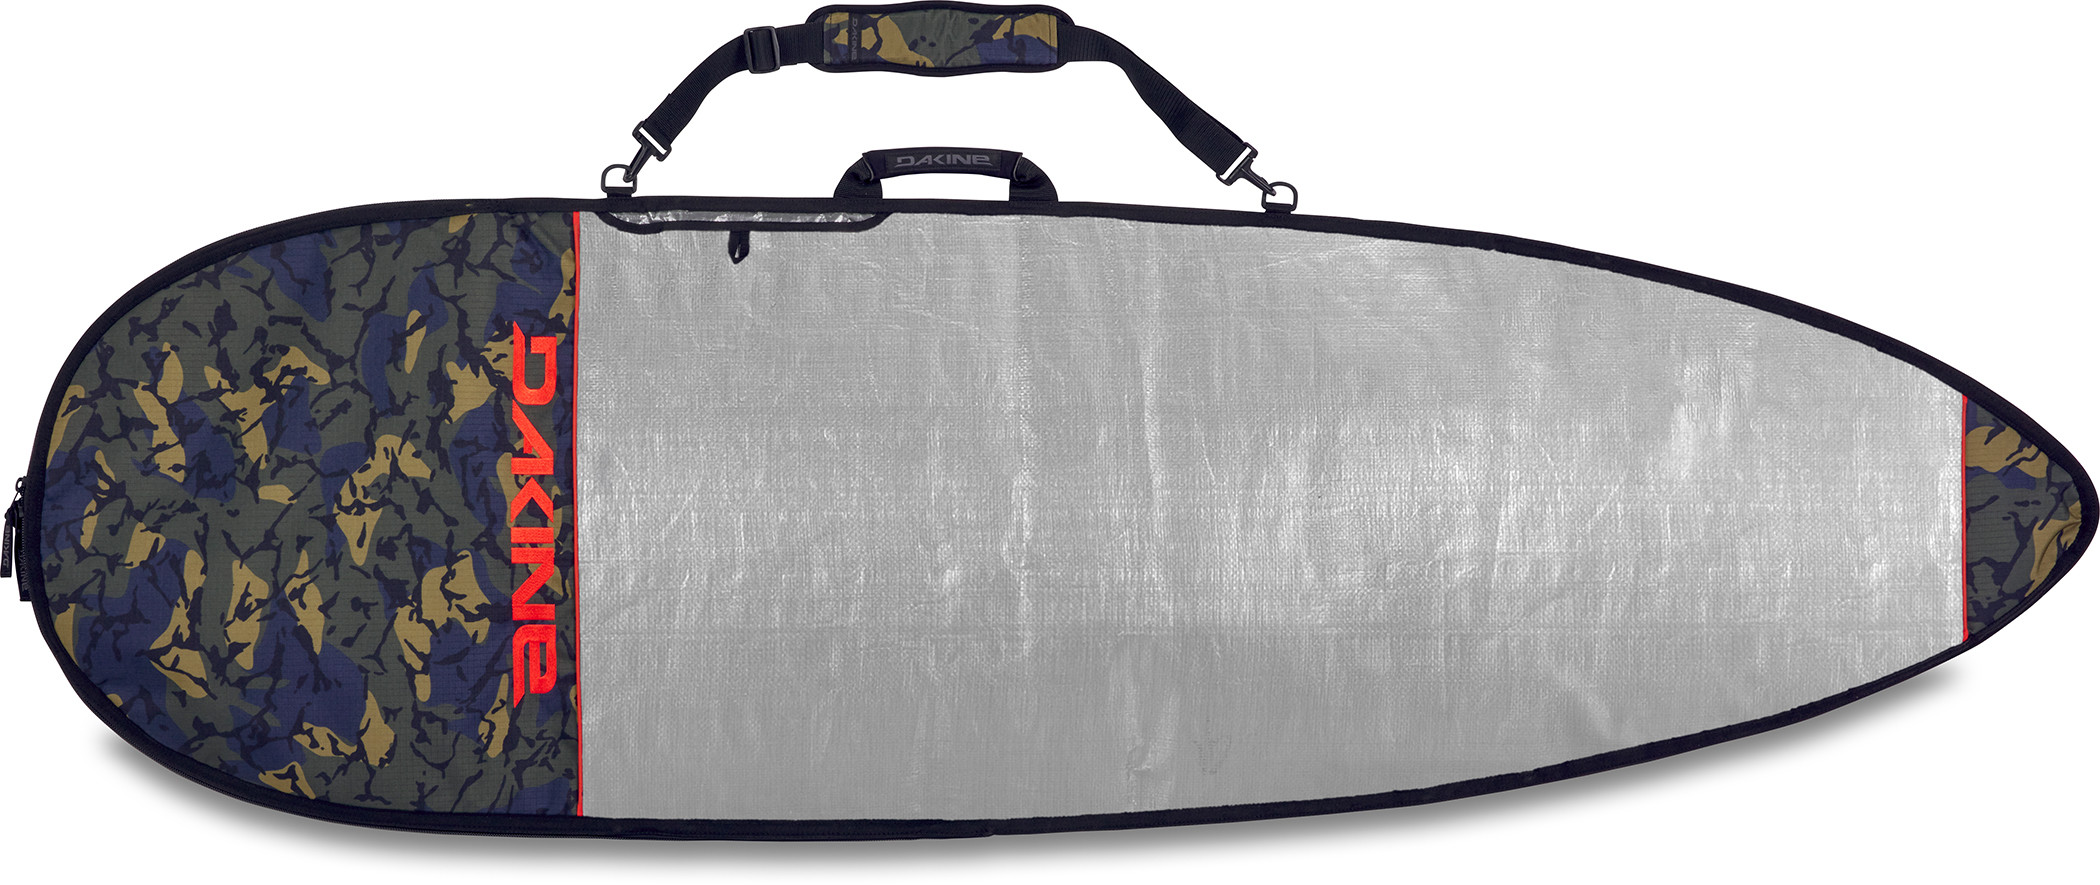 Daylight Surfboard Bag - Thruster